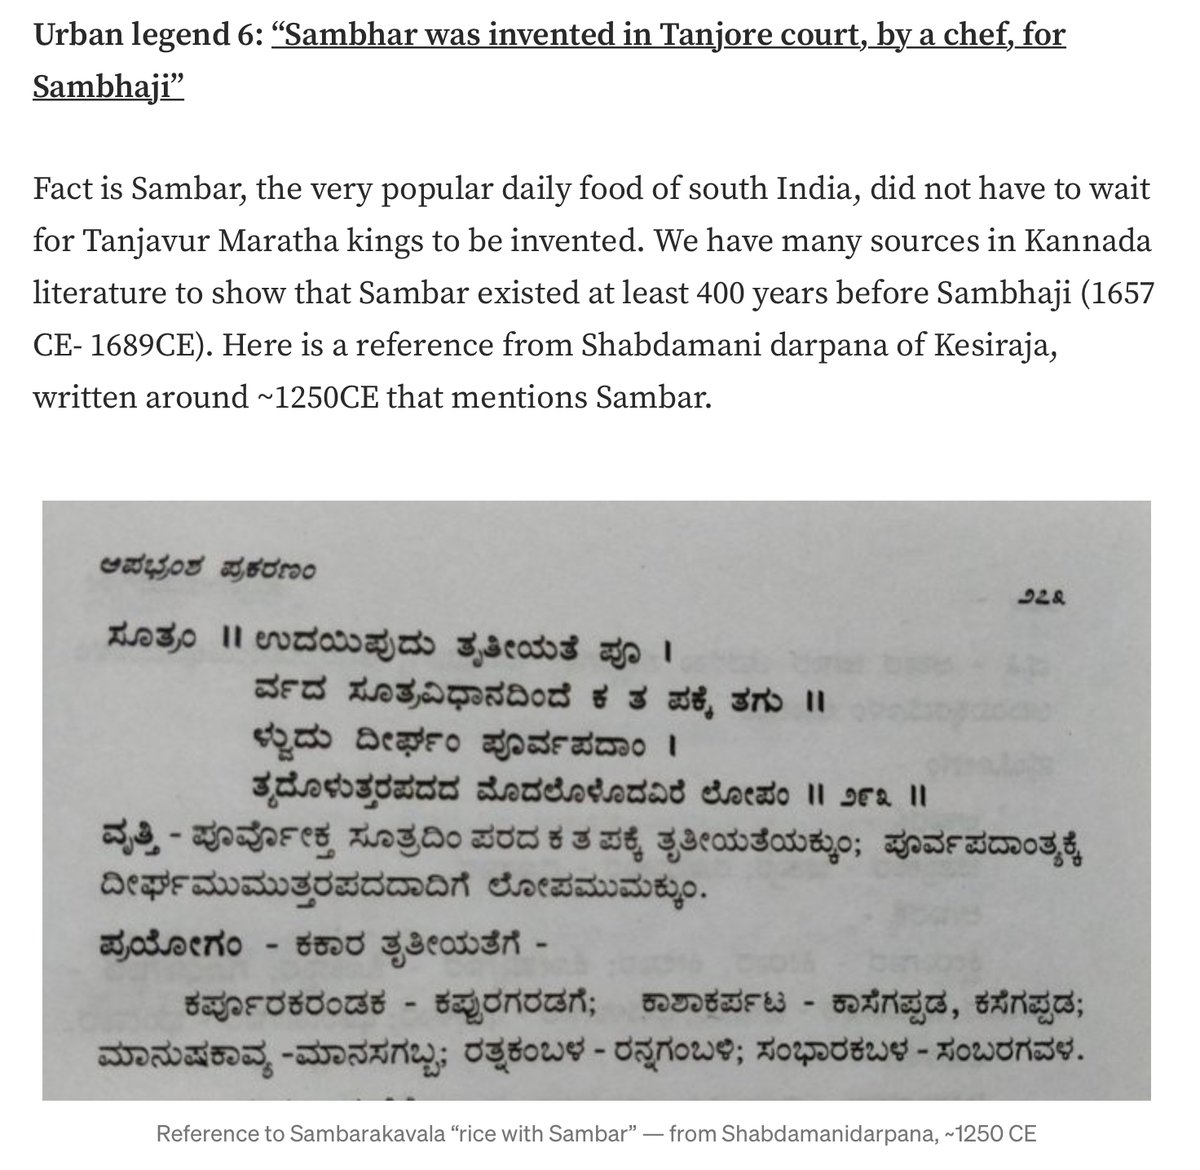 Reference to 'Sambarakavala' - Rice with Sambar is found in Shabdamanidarpanam, a work on Kannada grammar written by Kesiraja in 1260 CE. (Credits: @hamsanandi) Again has nothing to do with Marathis or Sambhaji. 1/n